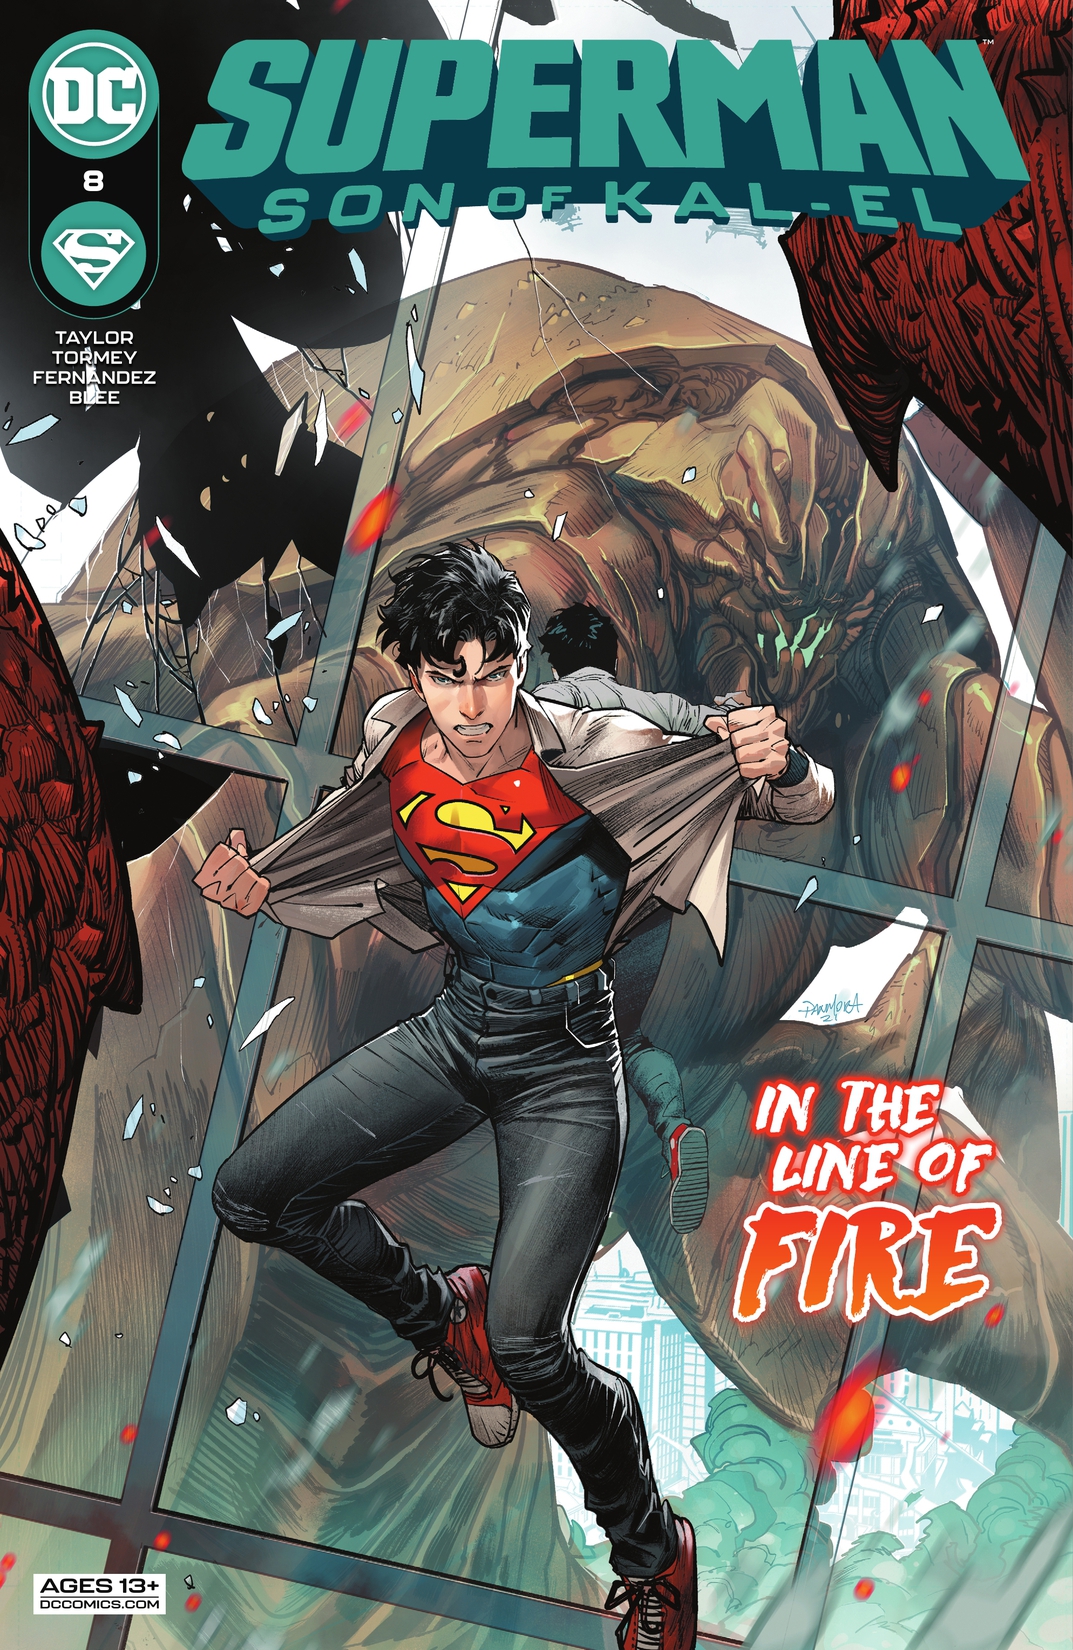 Superman: Son of Kal-El #8 preview images